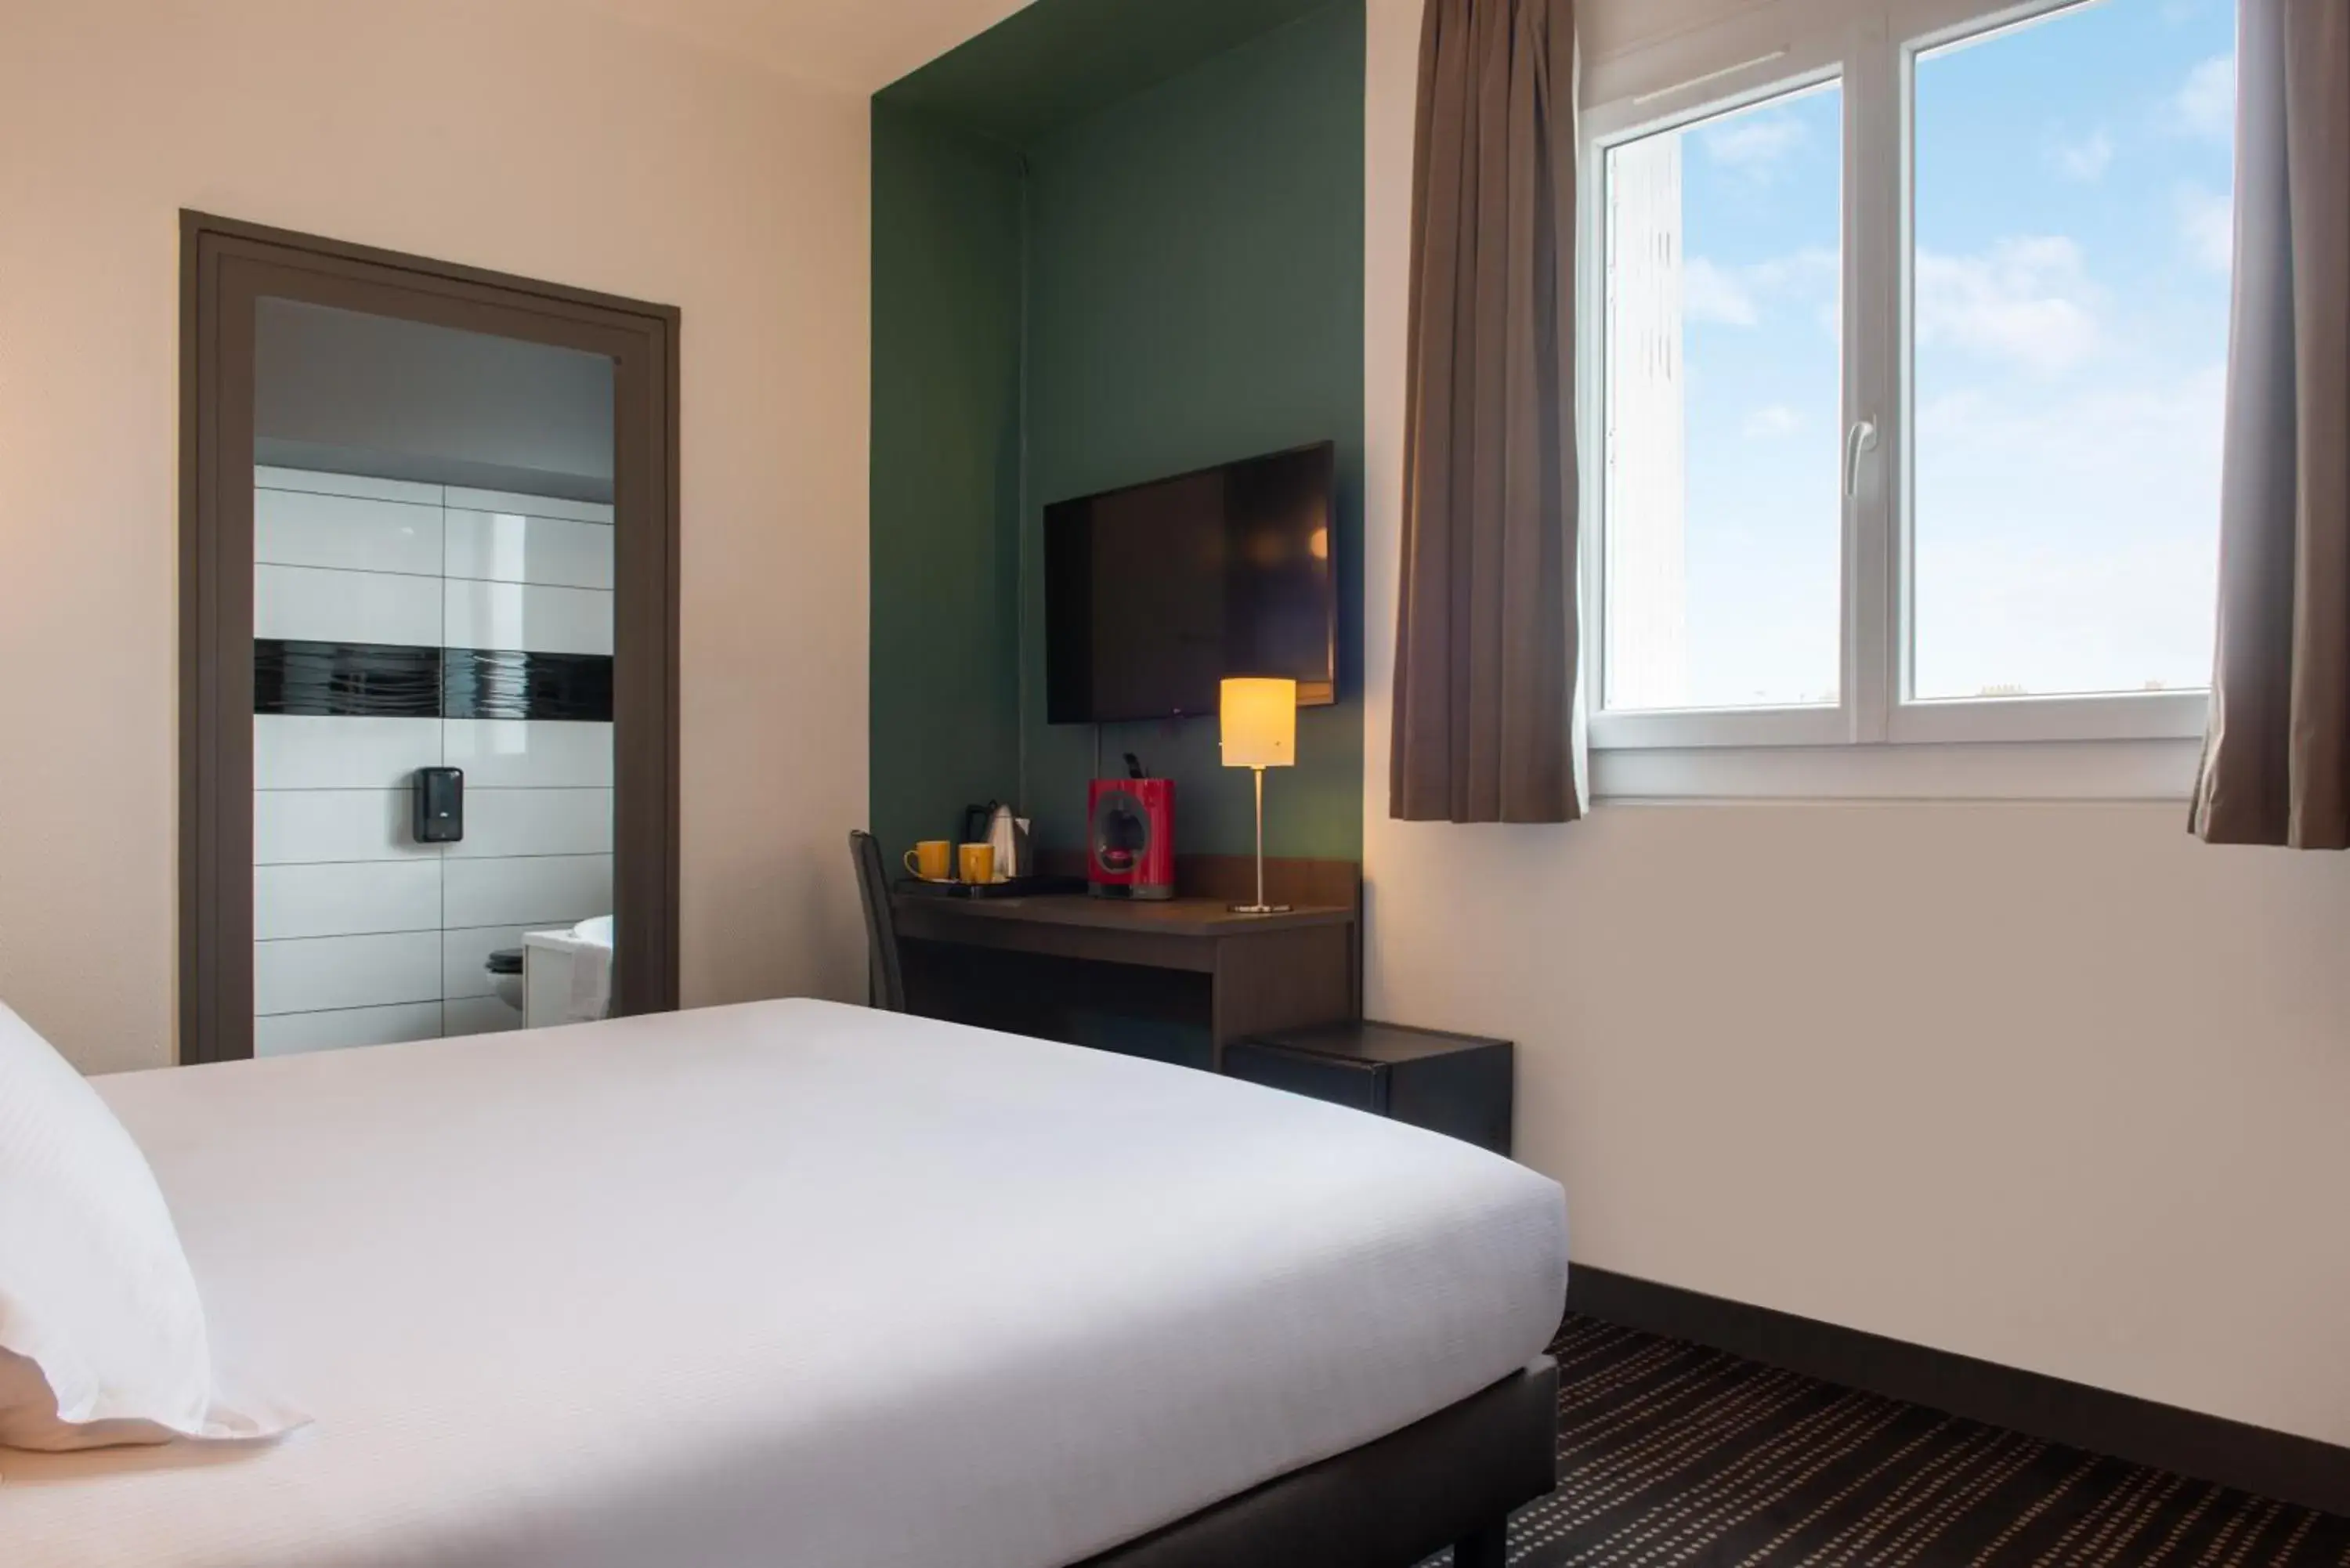 Bed, View in The Originals City, Hotel de l'Europe, Saint-Nazaire